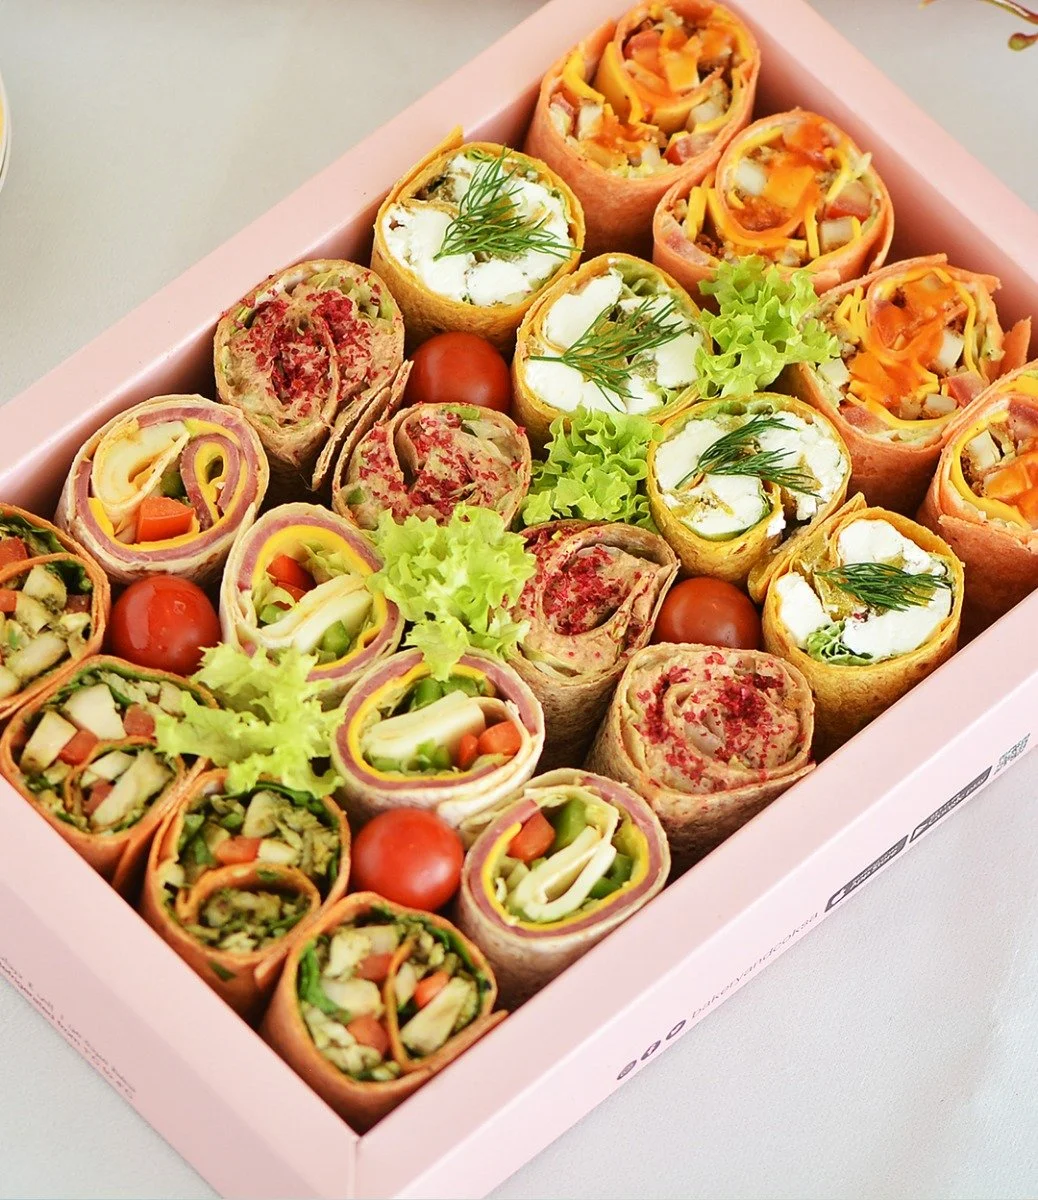 Mini Wrap Sandwiches by Bakery & Co